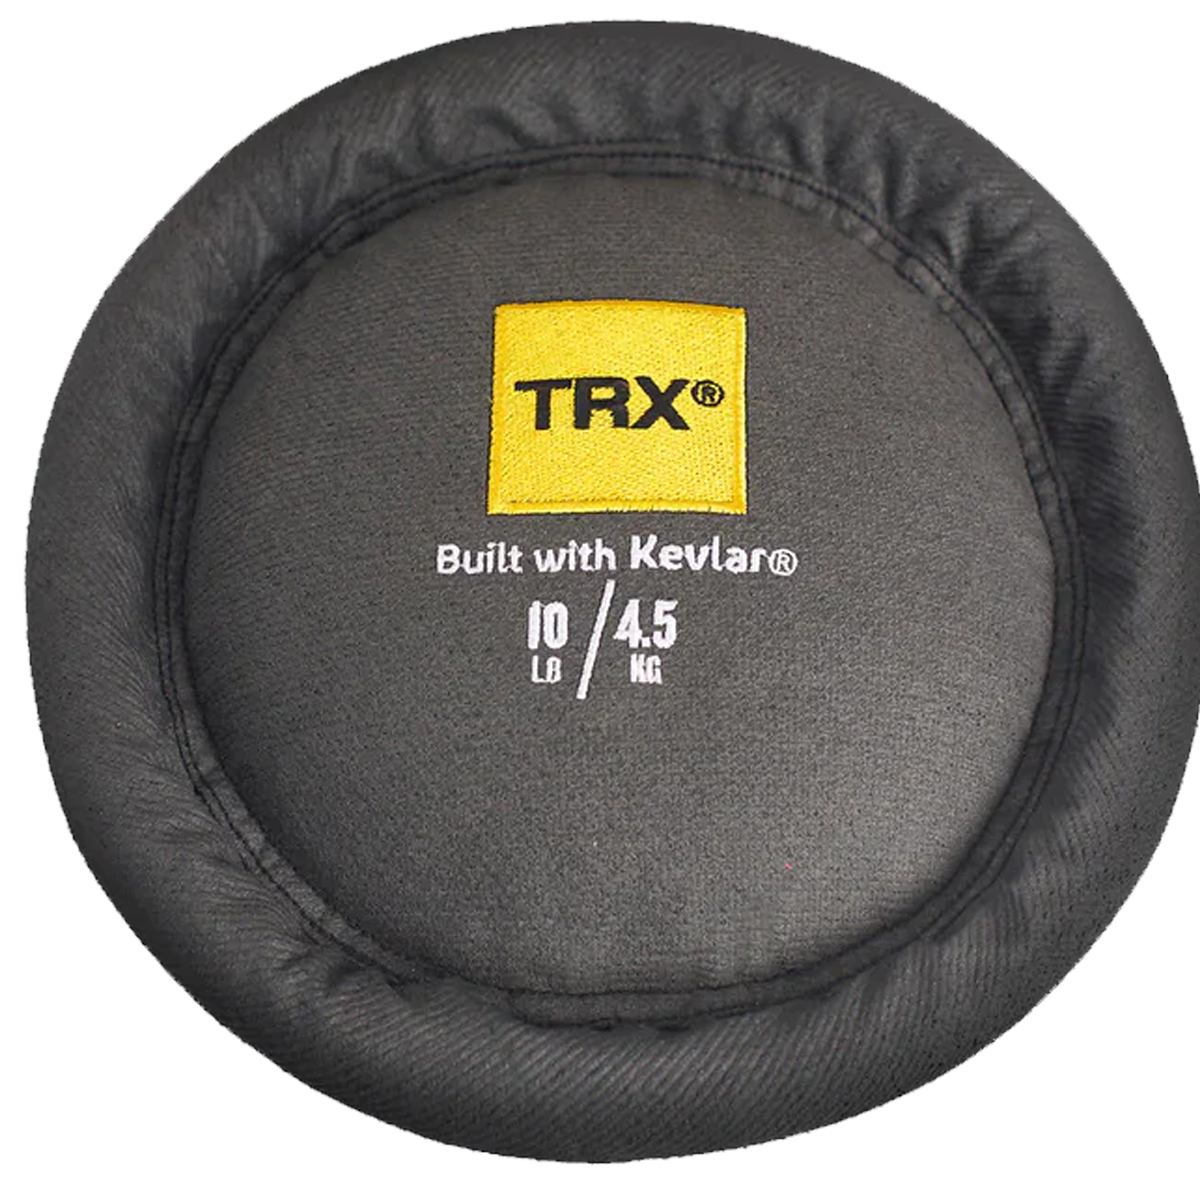 TRX XD Kevlar Sand Disc - 15 lb alternate view